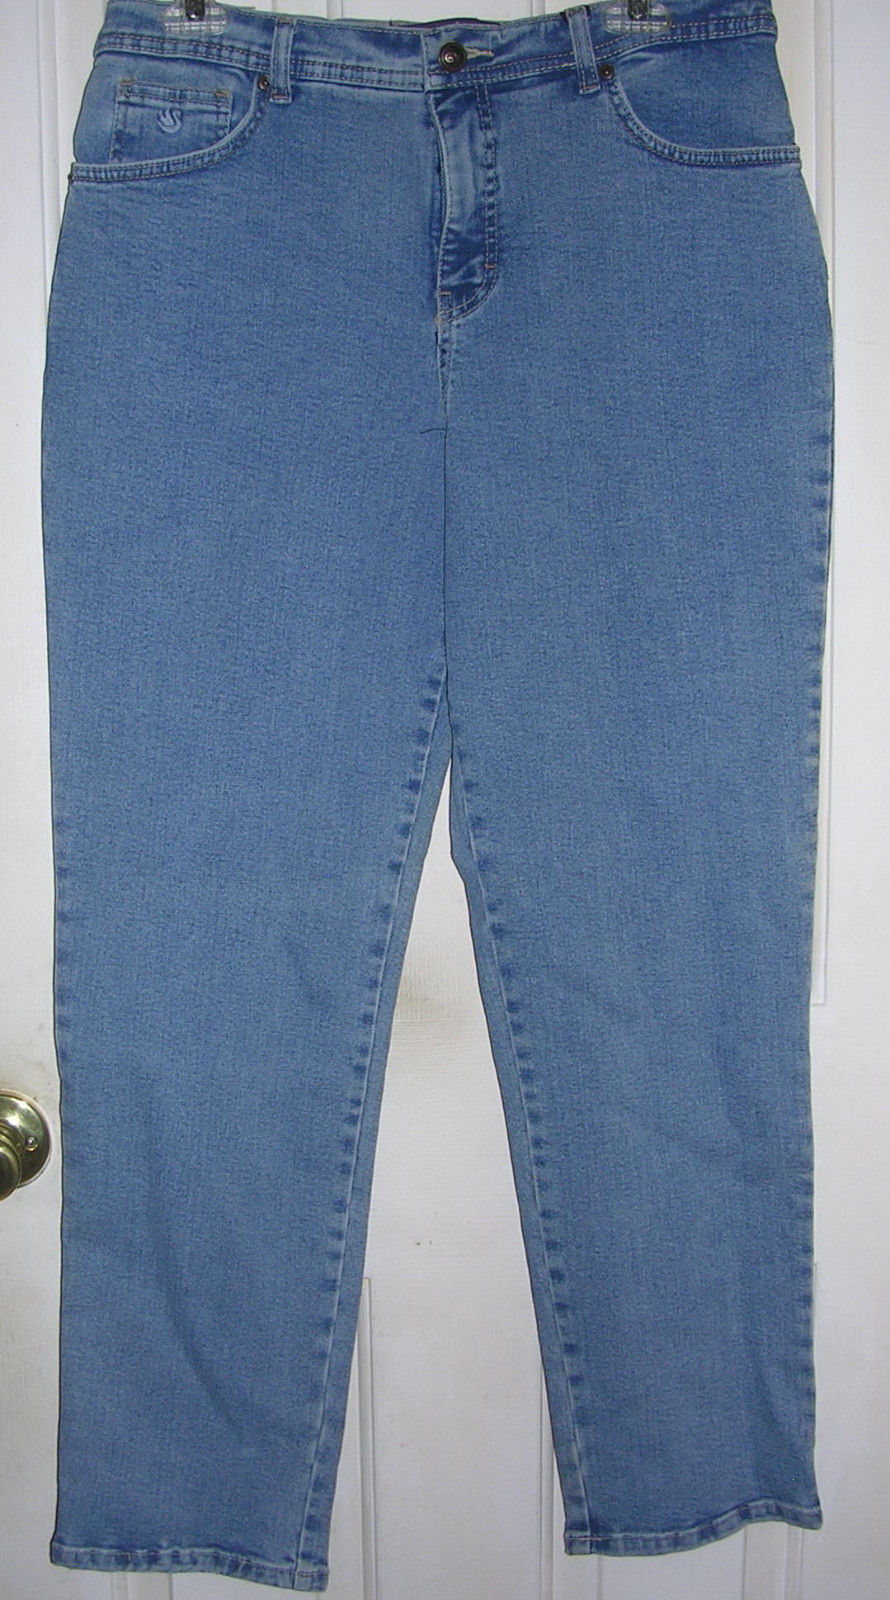 gloria vanderbilt amanda jeans 16w short